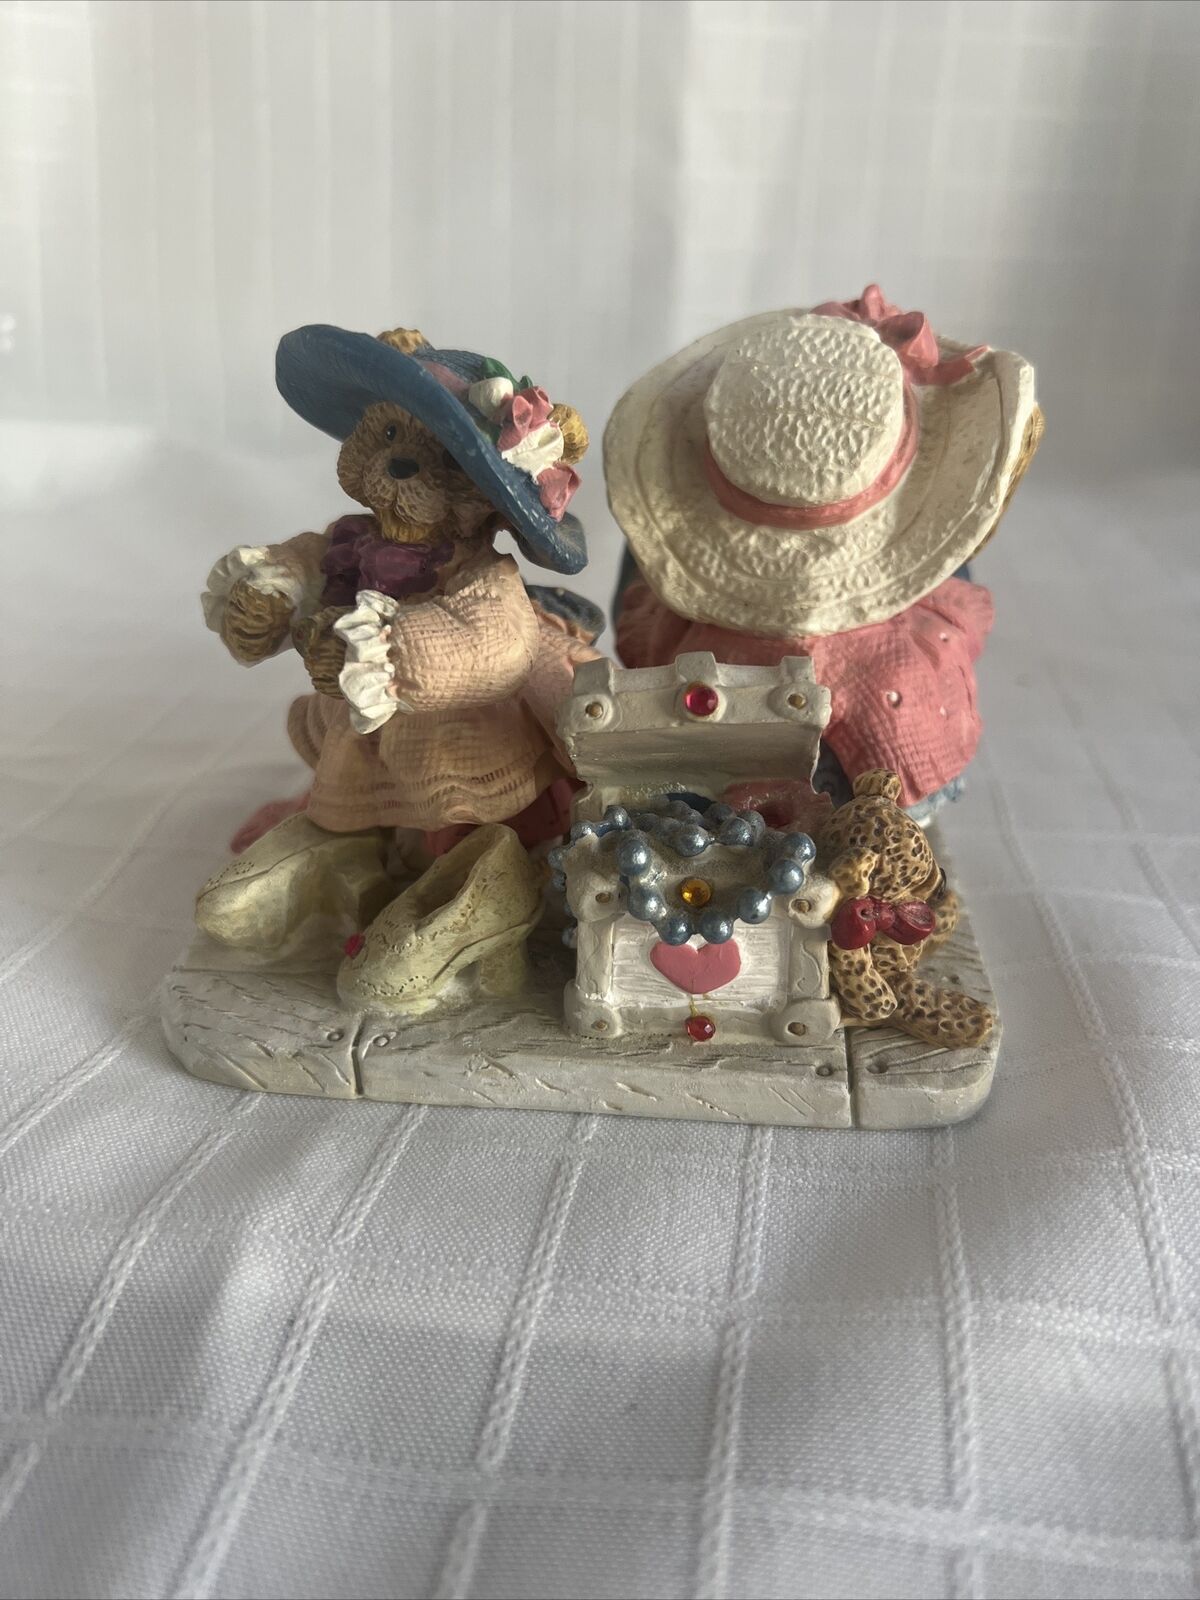 Vintage Teddy Bears Dressing up Figurine 1994 #2A12 - Mercuries USA Resin 